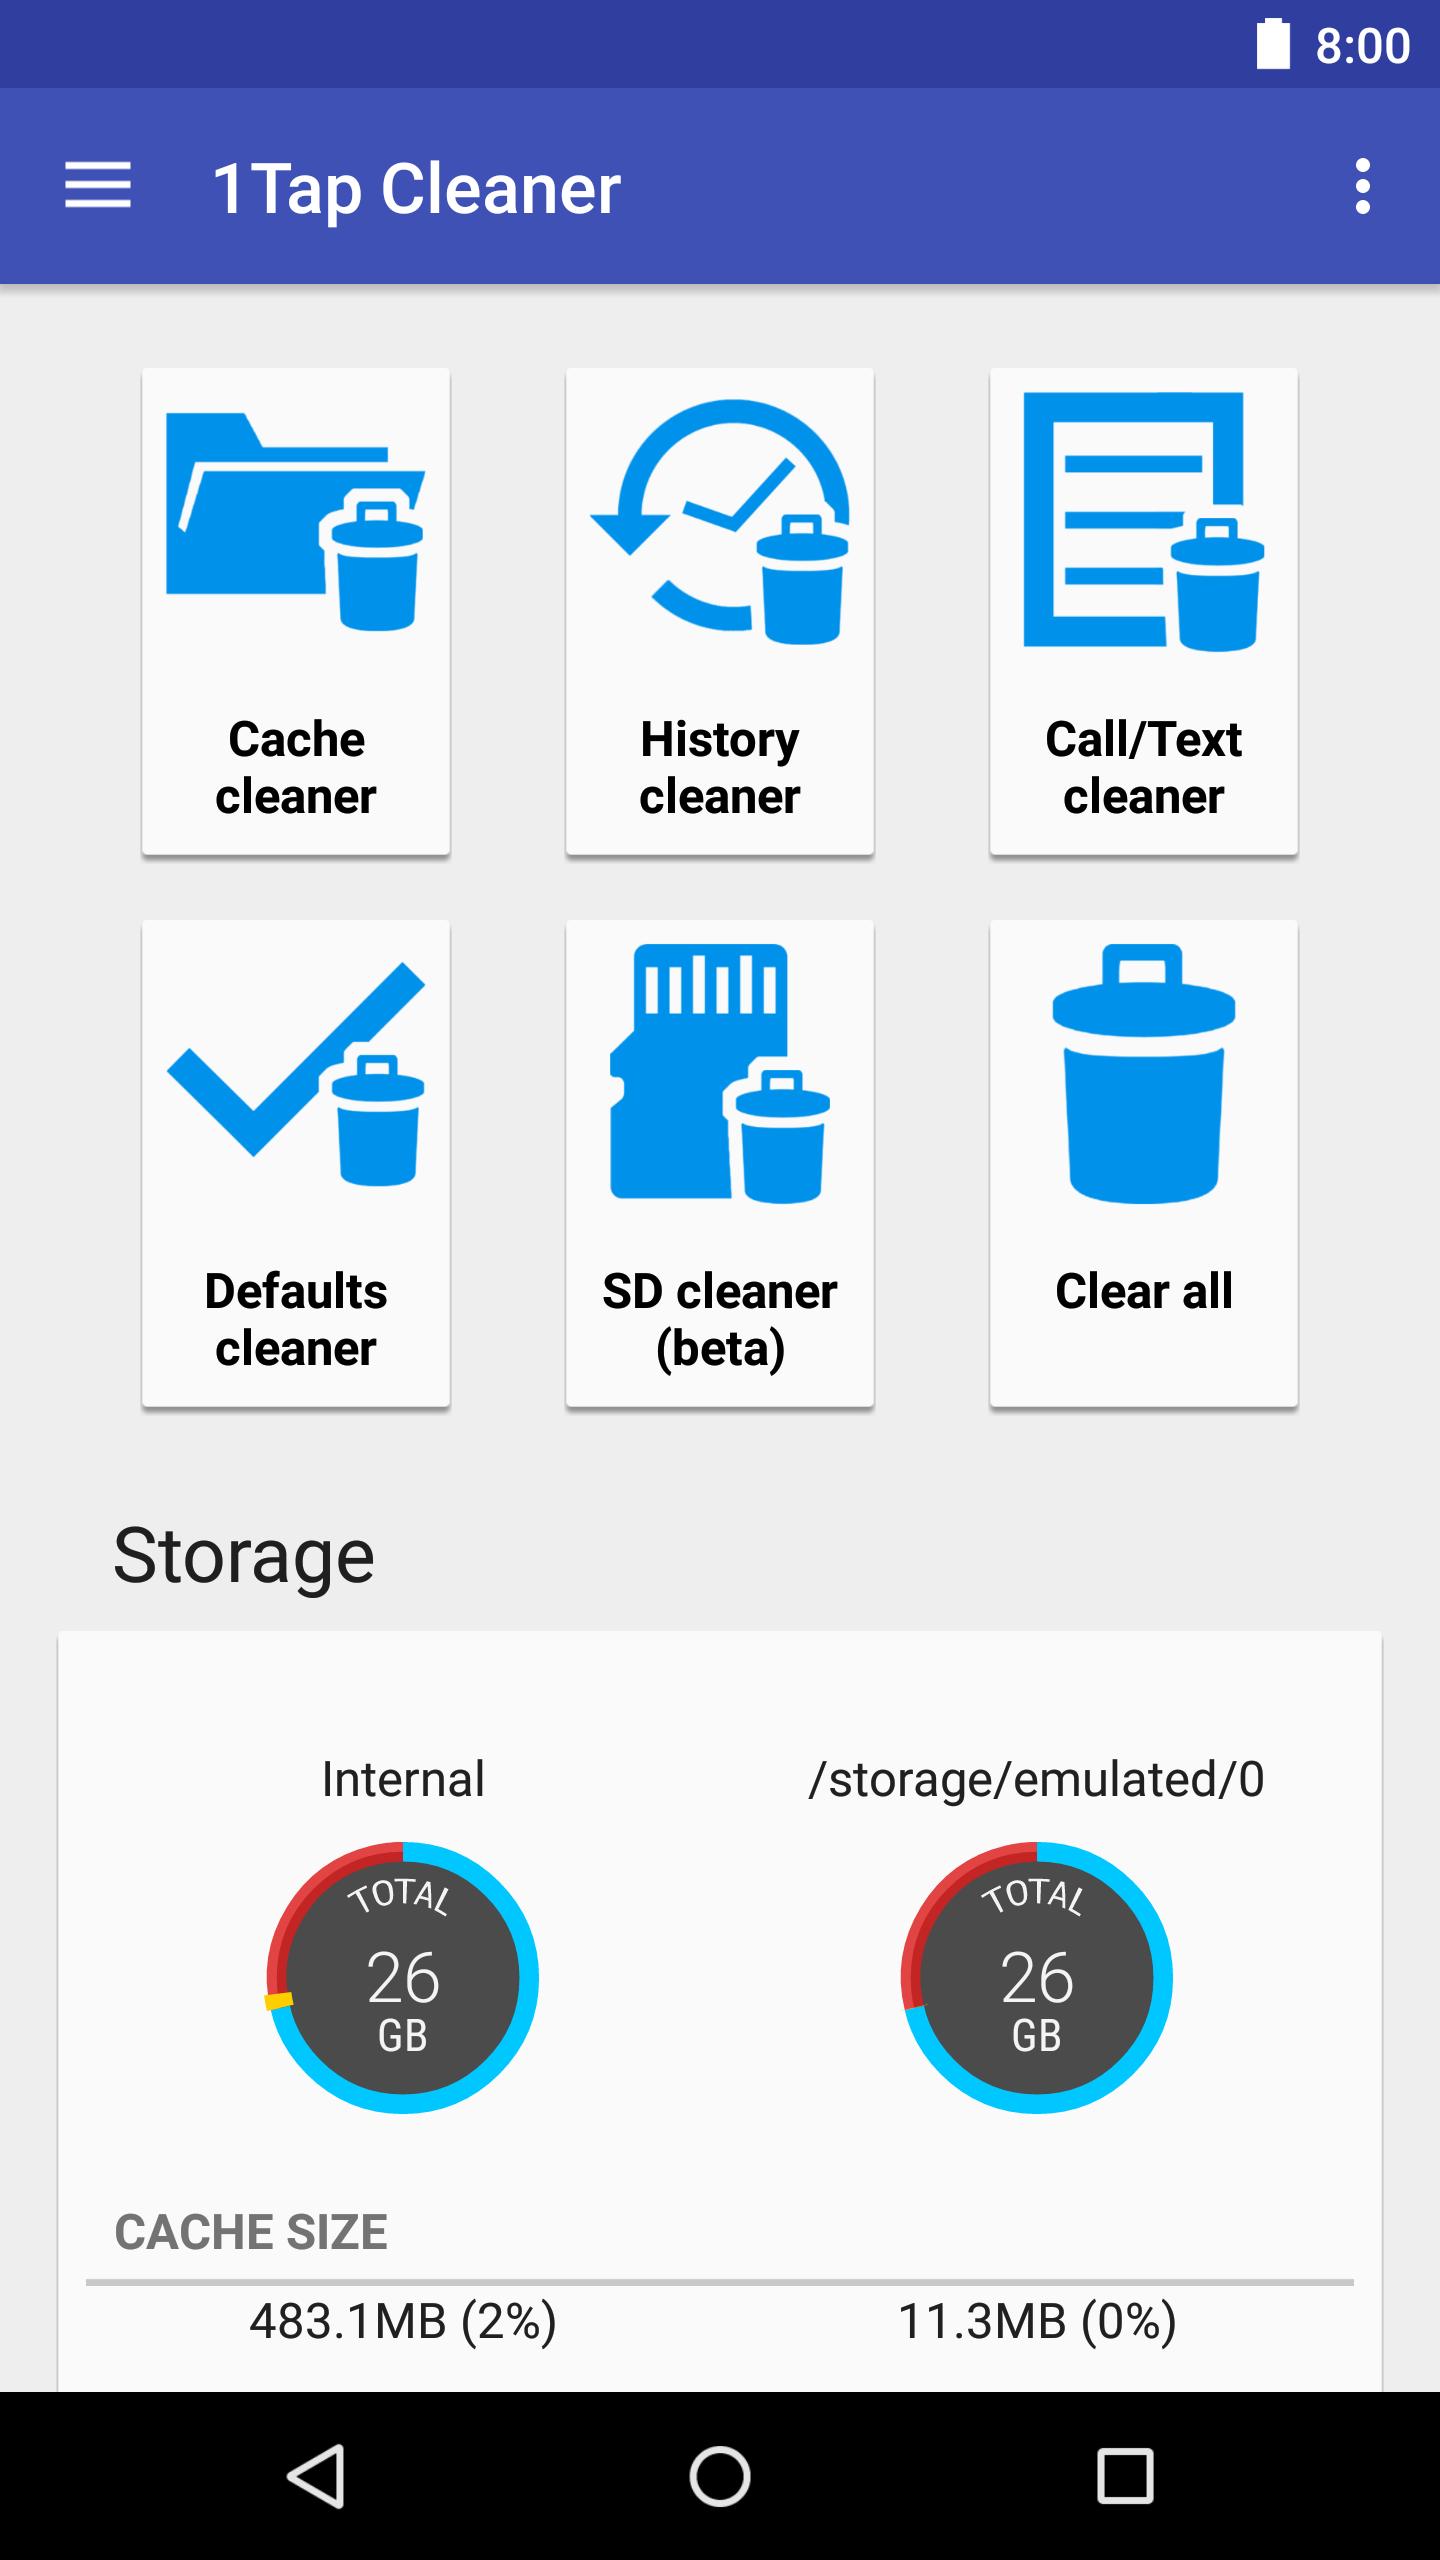 Tap cleaner pro. 1tap Cleaner. 1tap Cleaner Pro. 1 Tap Cleaner Pro иконка. Приложение для очистки кэша на андроид.